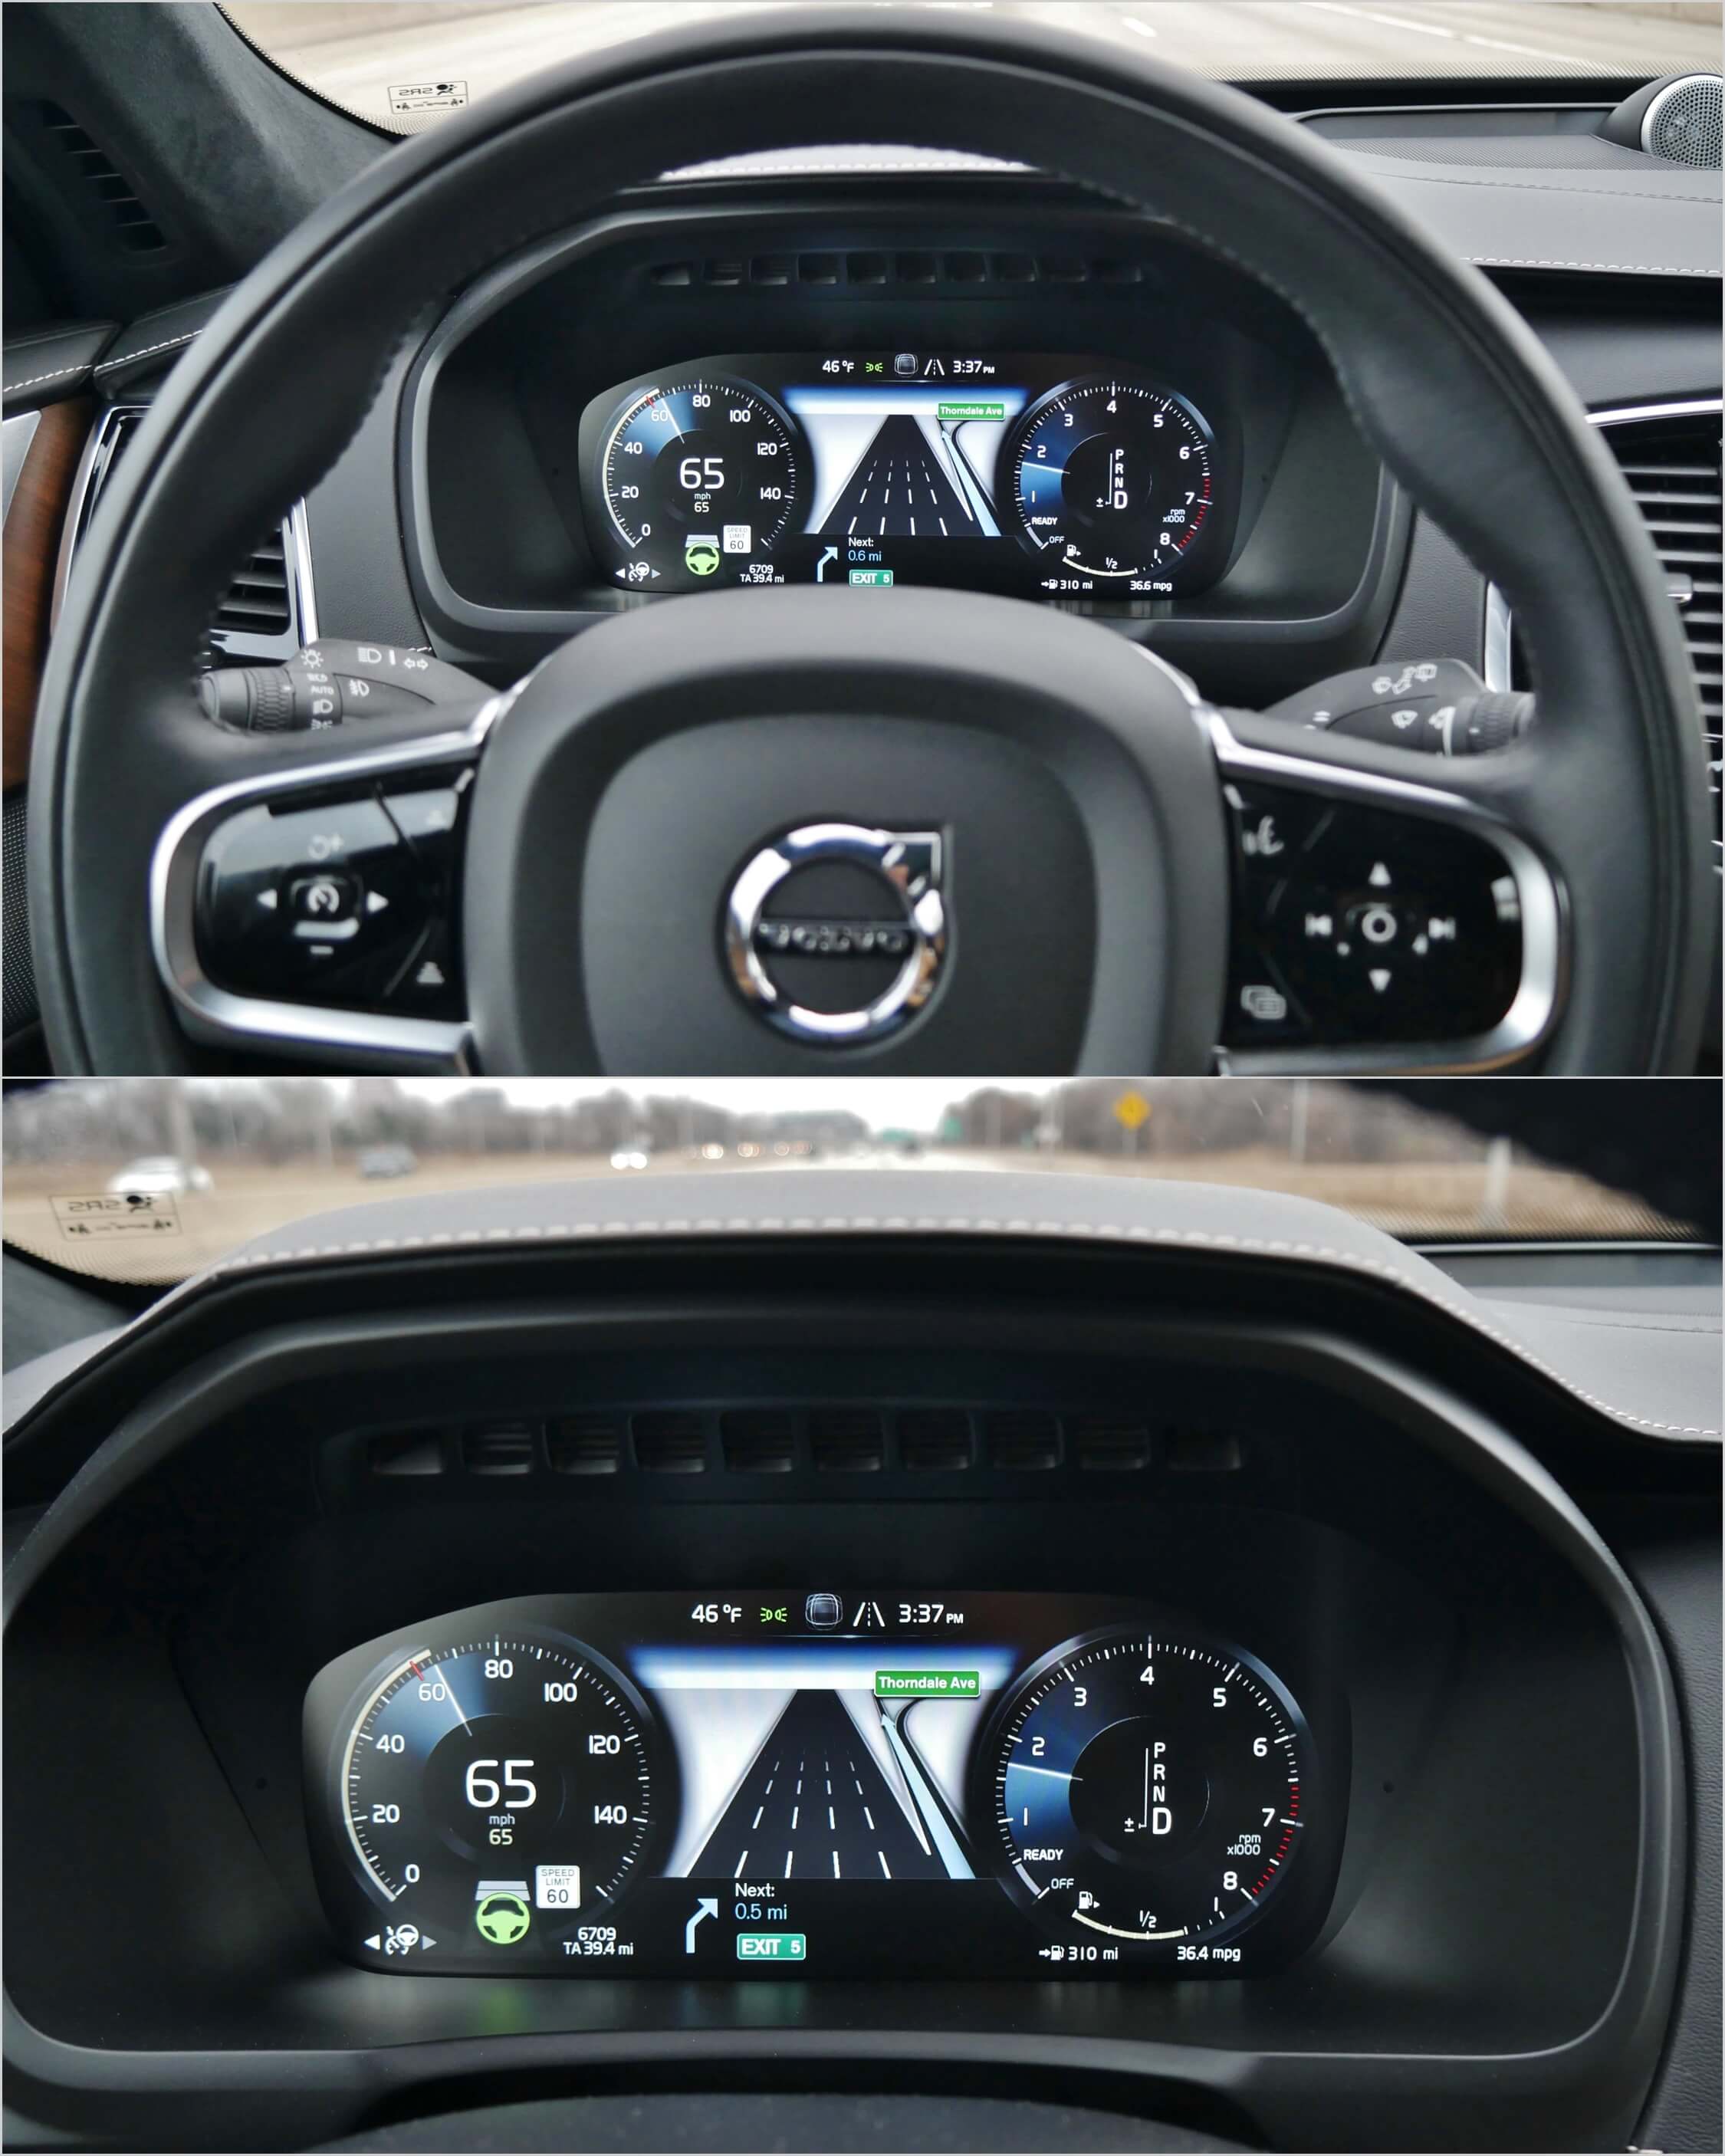 2017 XC90 T6 AWD Inscription: 12.3" inch LCD configurable Digital Driver Display depicts Navigation graphics and Pilot Assist 2 autonomous systems status